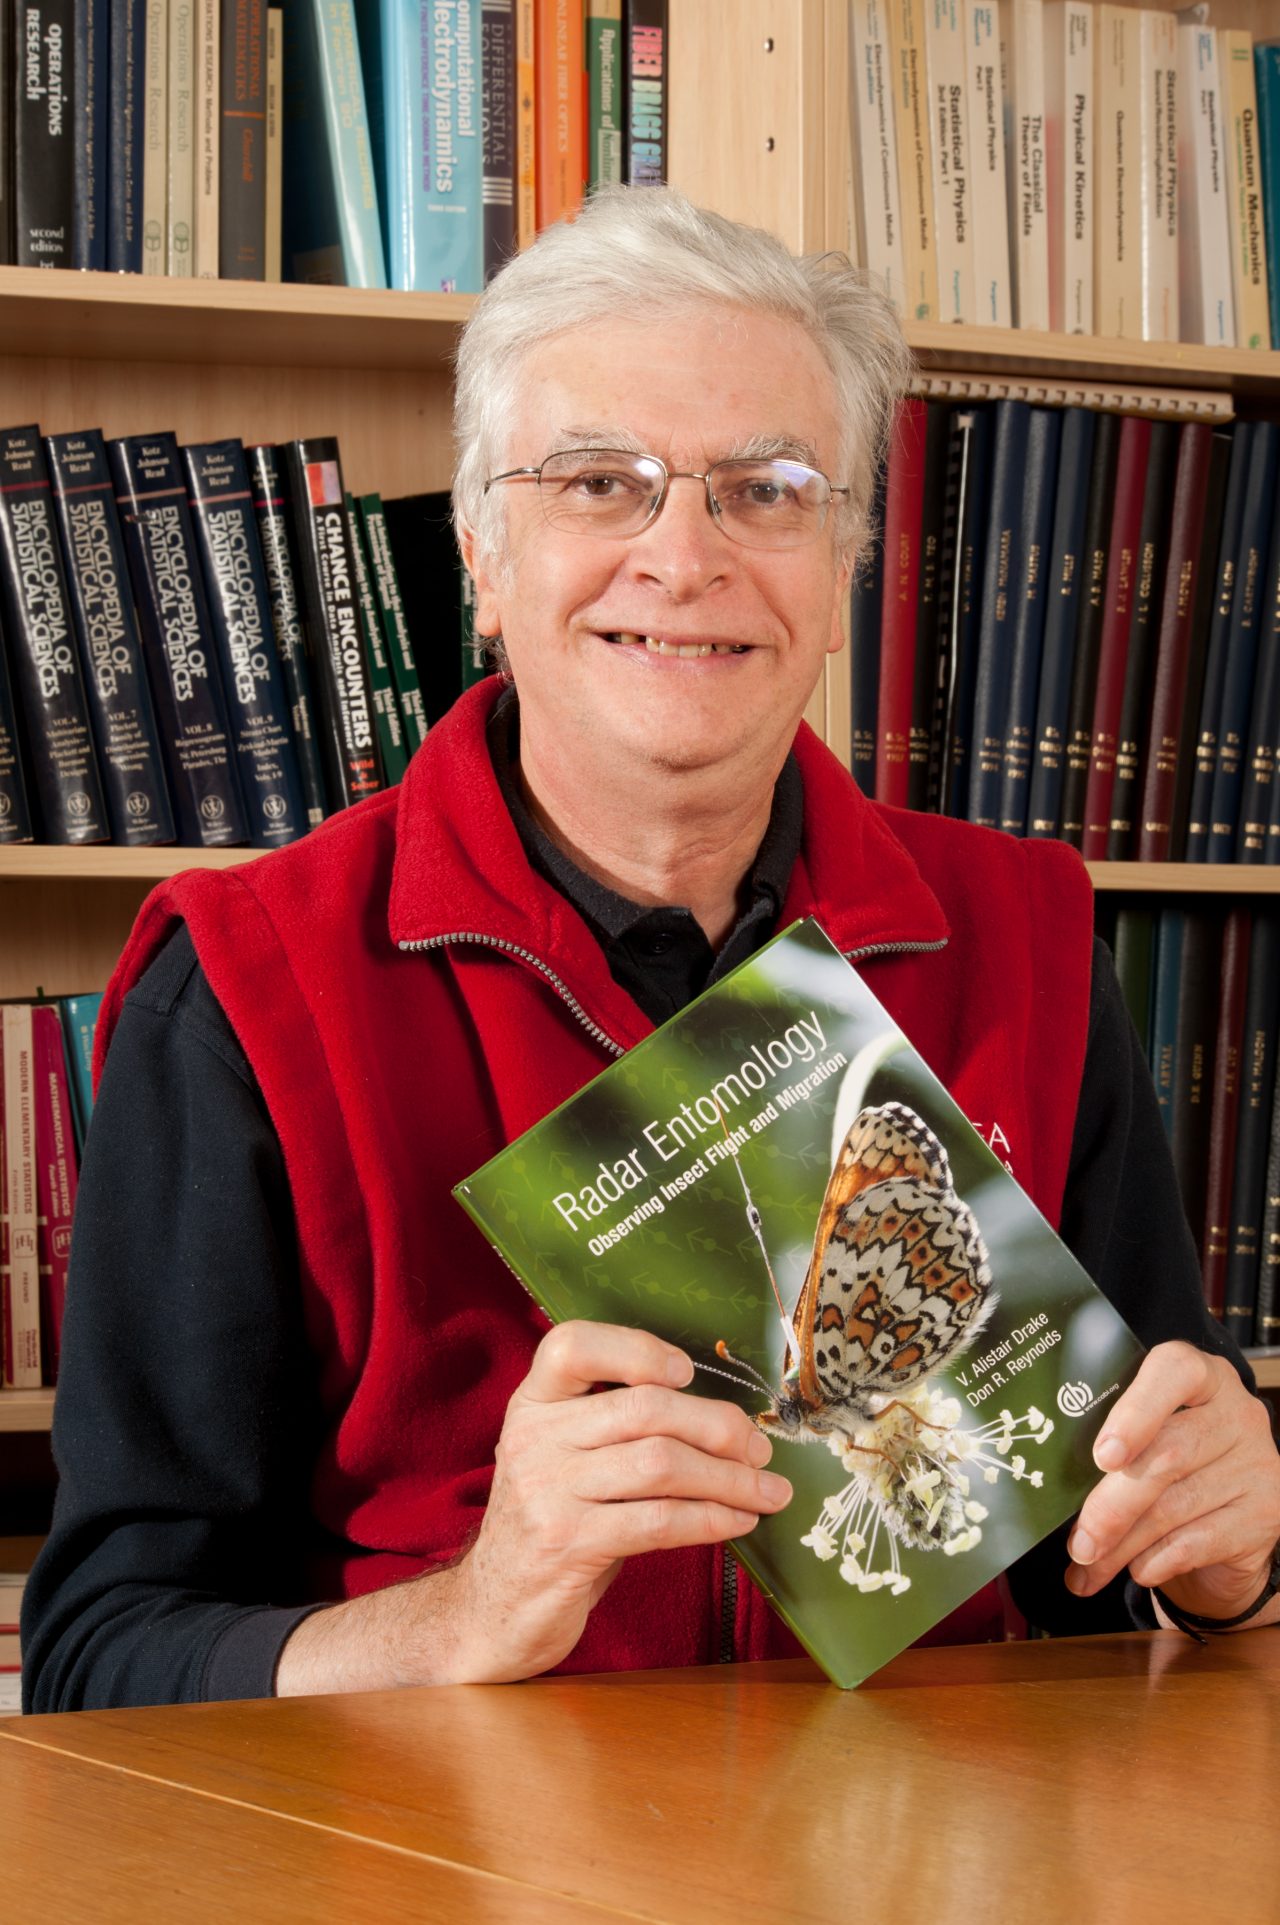 Dr Alistair Drake with his book Radar Entomology. Observing Insect Flight and Migration published in December 2012.
 
Drake, V.A., & Reynolds, D.R. 2012, Radar Entomology. Observing Insect Flight and Migration, CABI, Wallingford, UK, ISBN: 9781845935566.